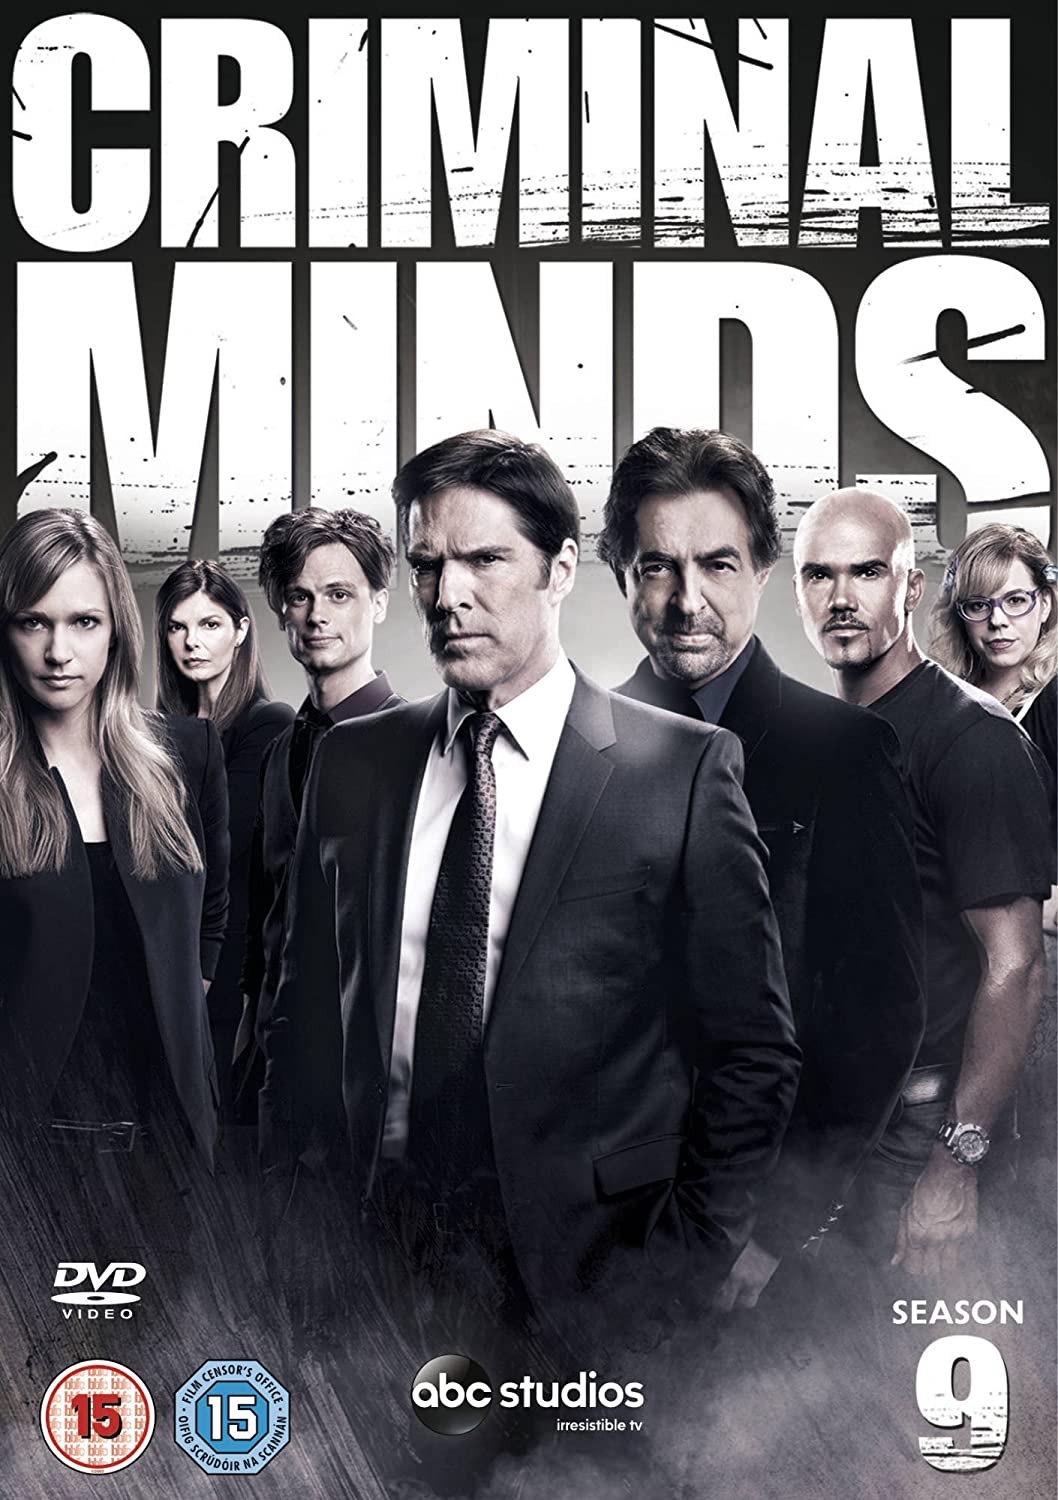 Mentes criminales - Temporada 9 [DVD]